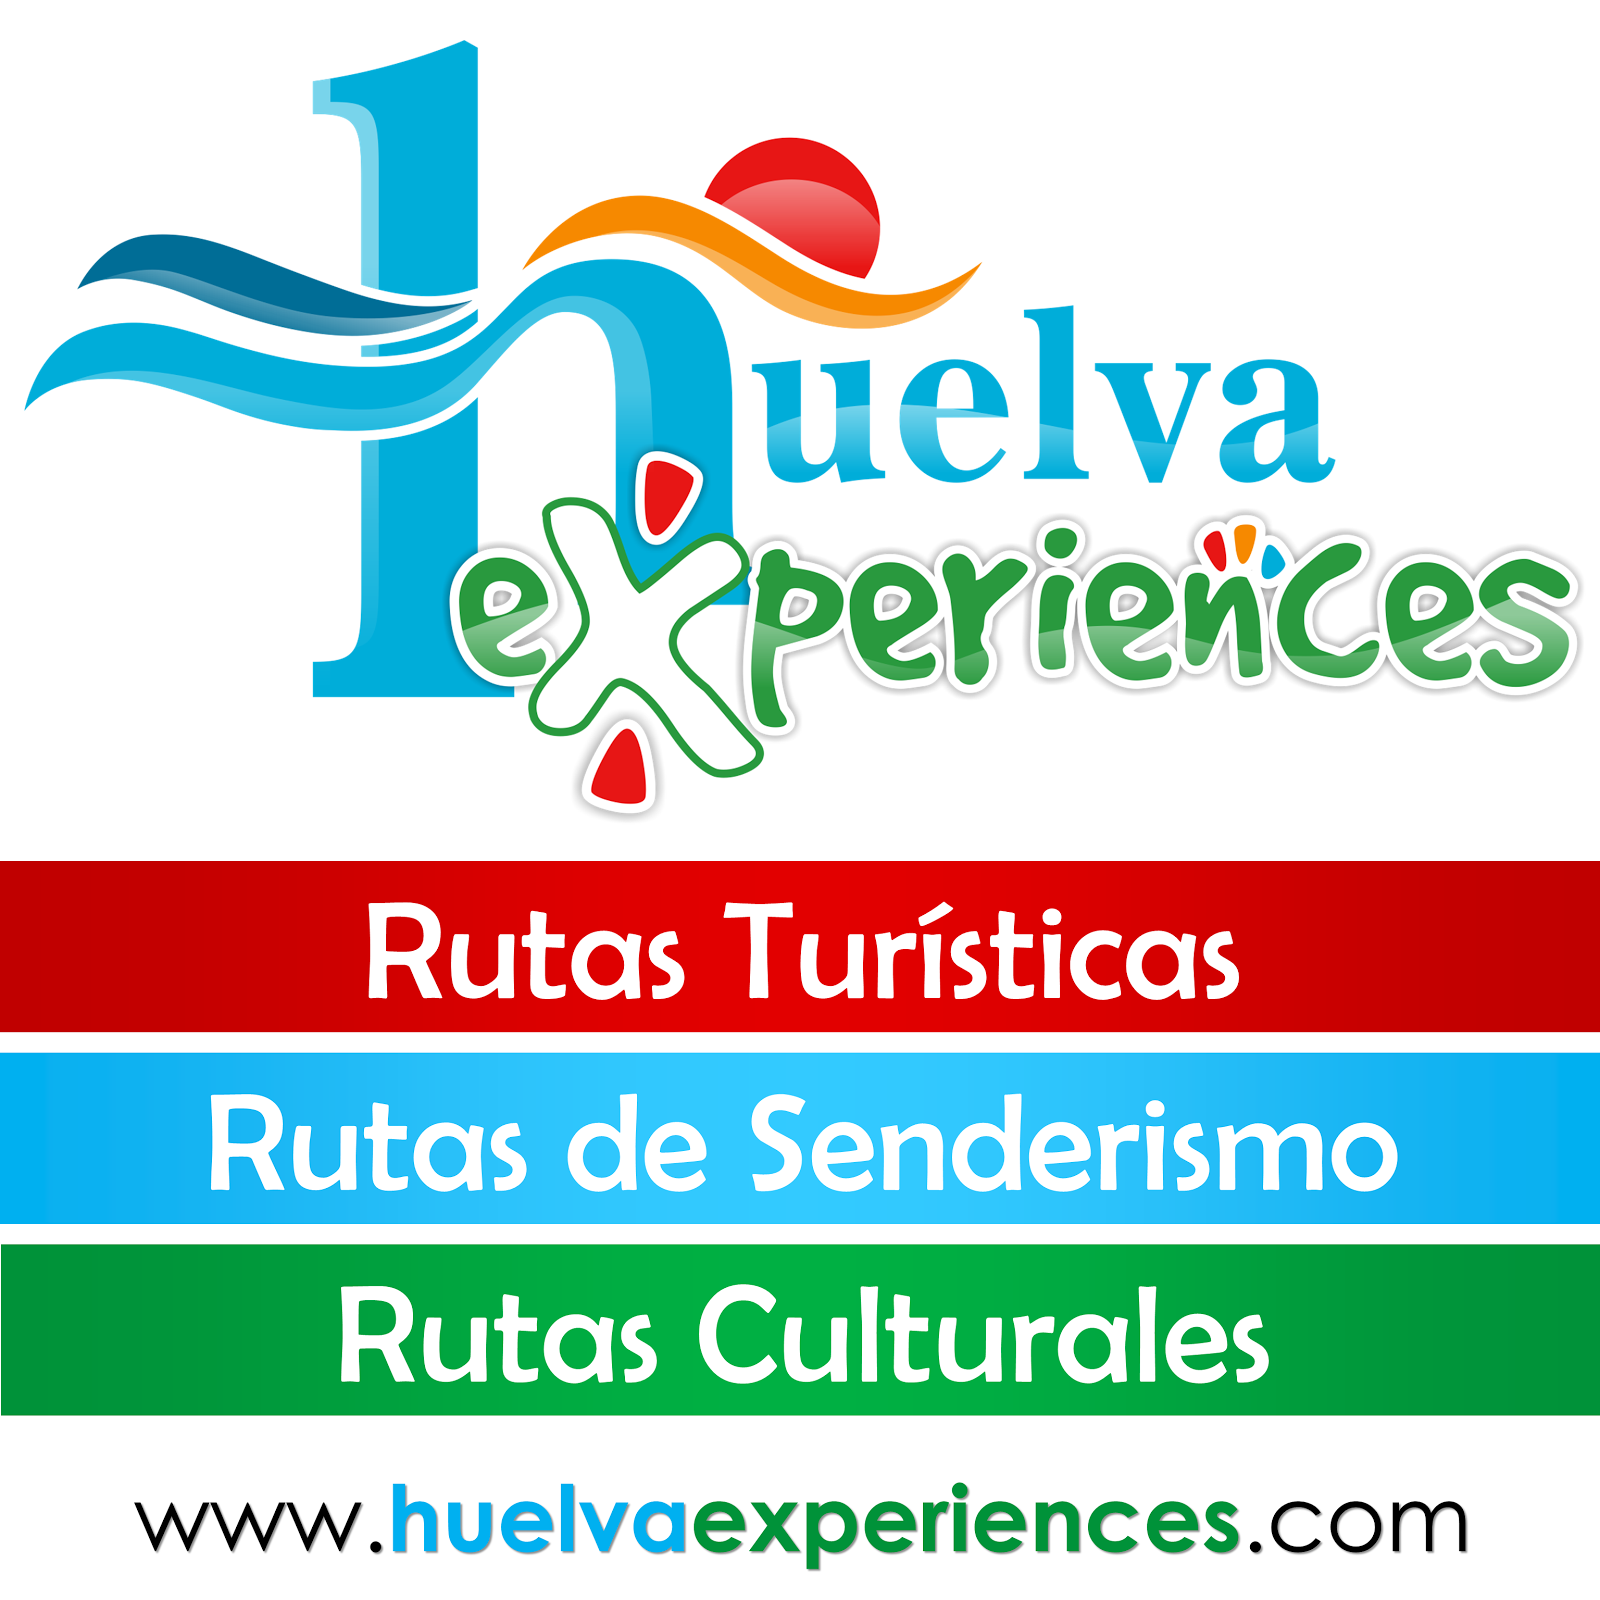 Huelva Experiences